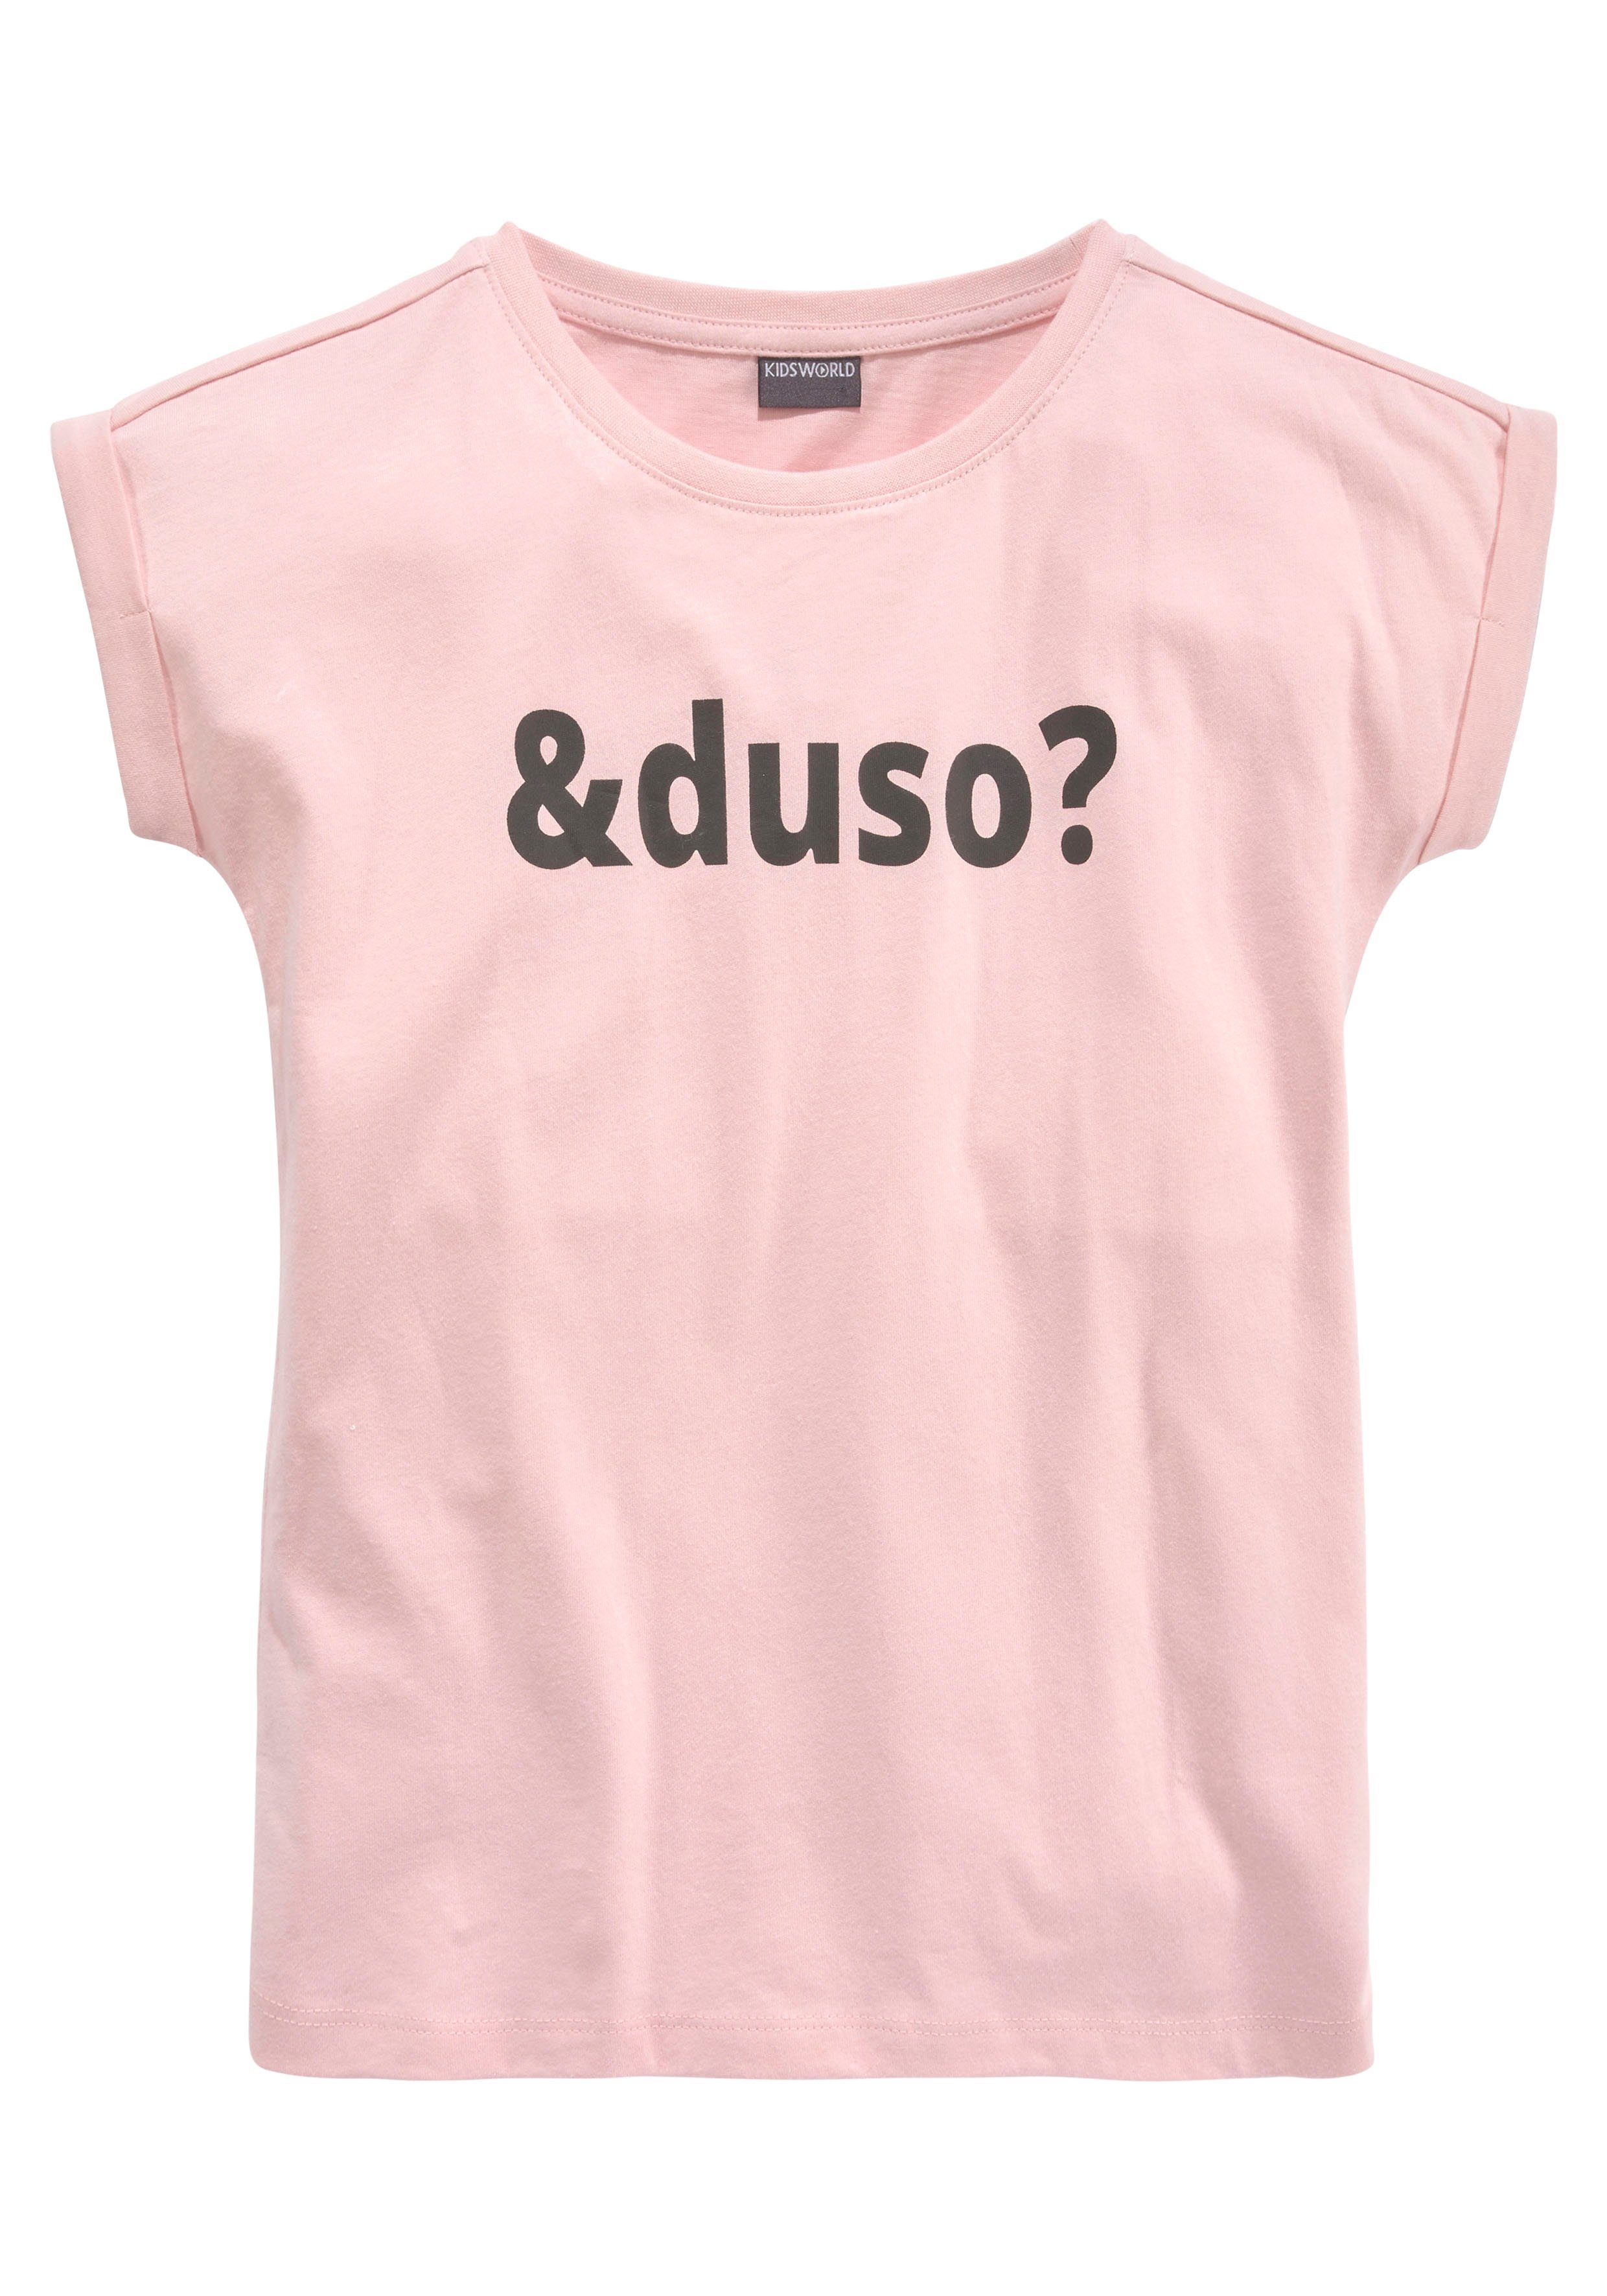 T-Shirt bequemer in Passform KIDSWORLD &duso?